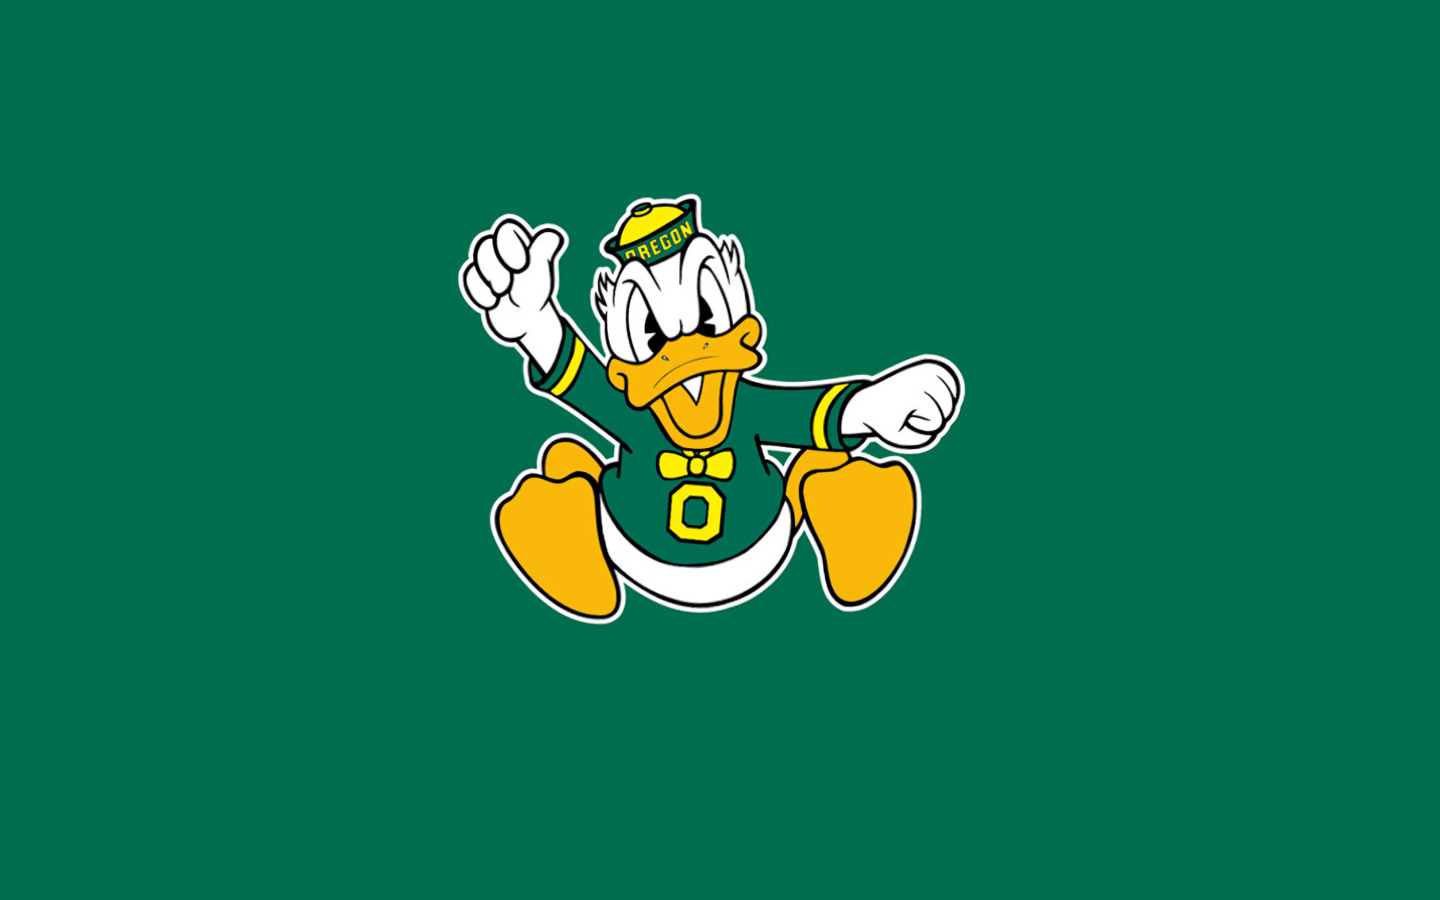 Oregon Ducks University Football Team wallpaper 1440x900